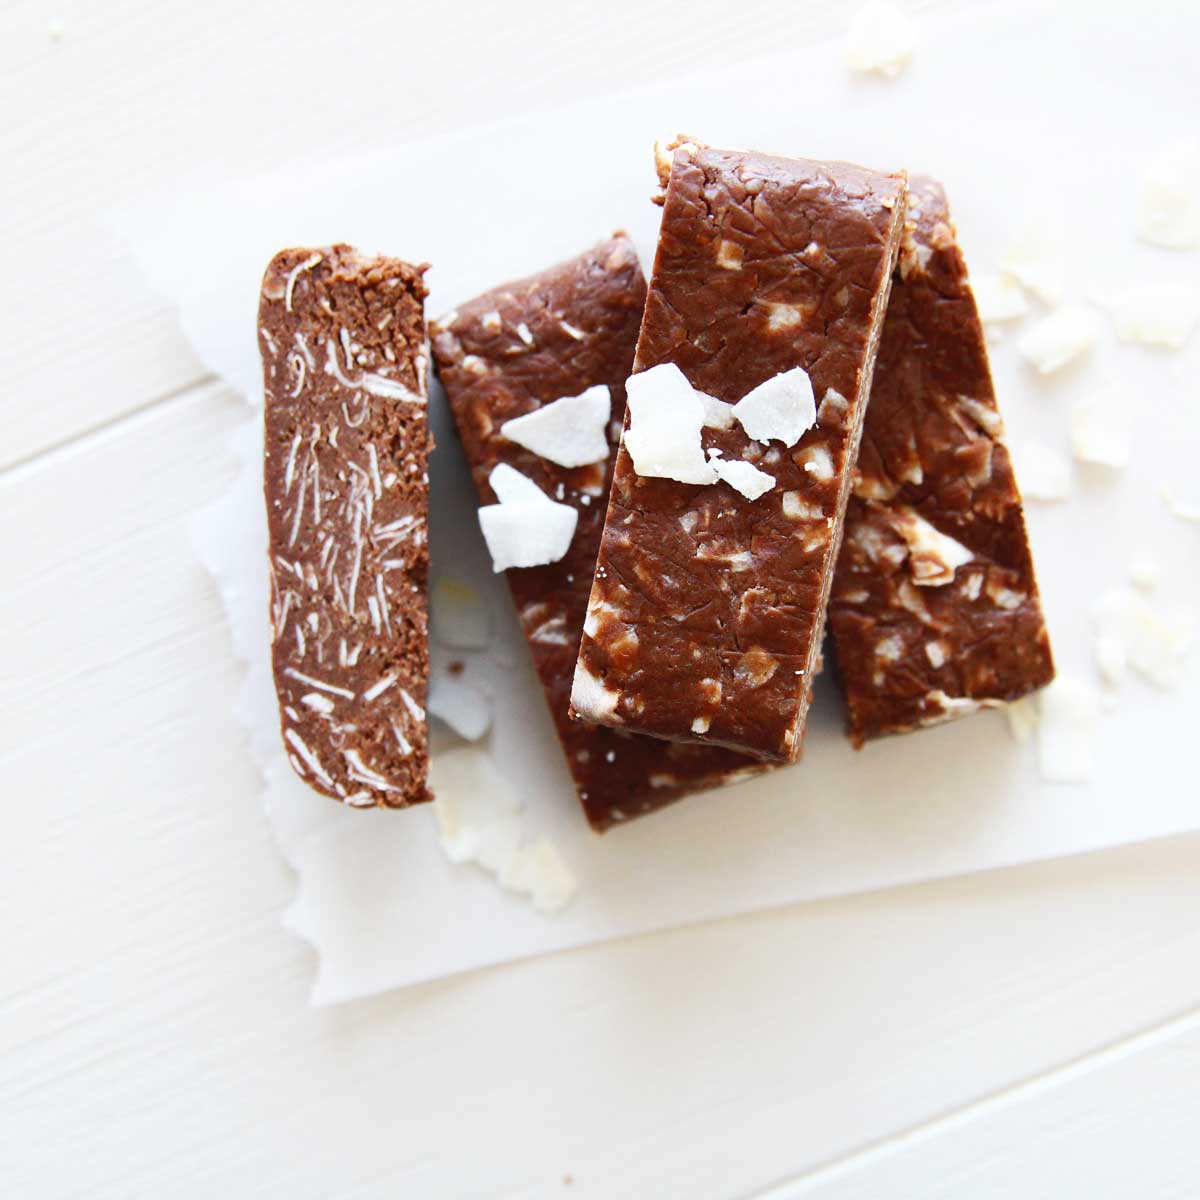 Vegan Coconut Chocolate "Almond Joy" Protein Bars Recipe - Zucchini Flatbread